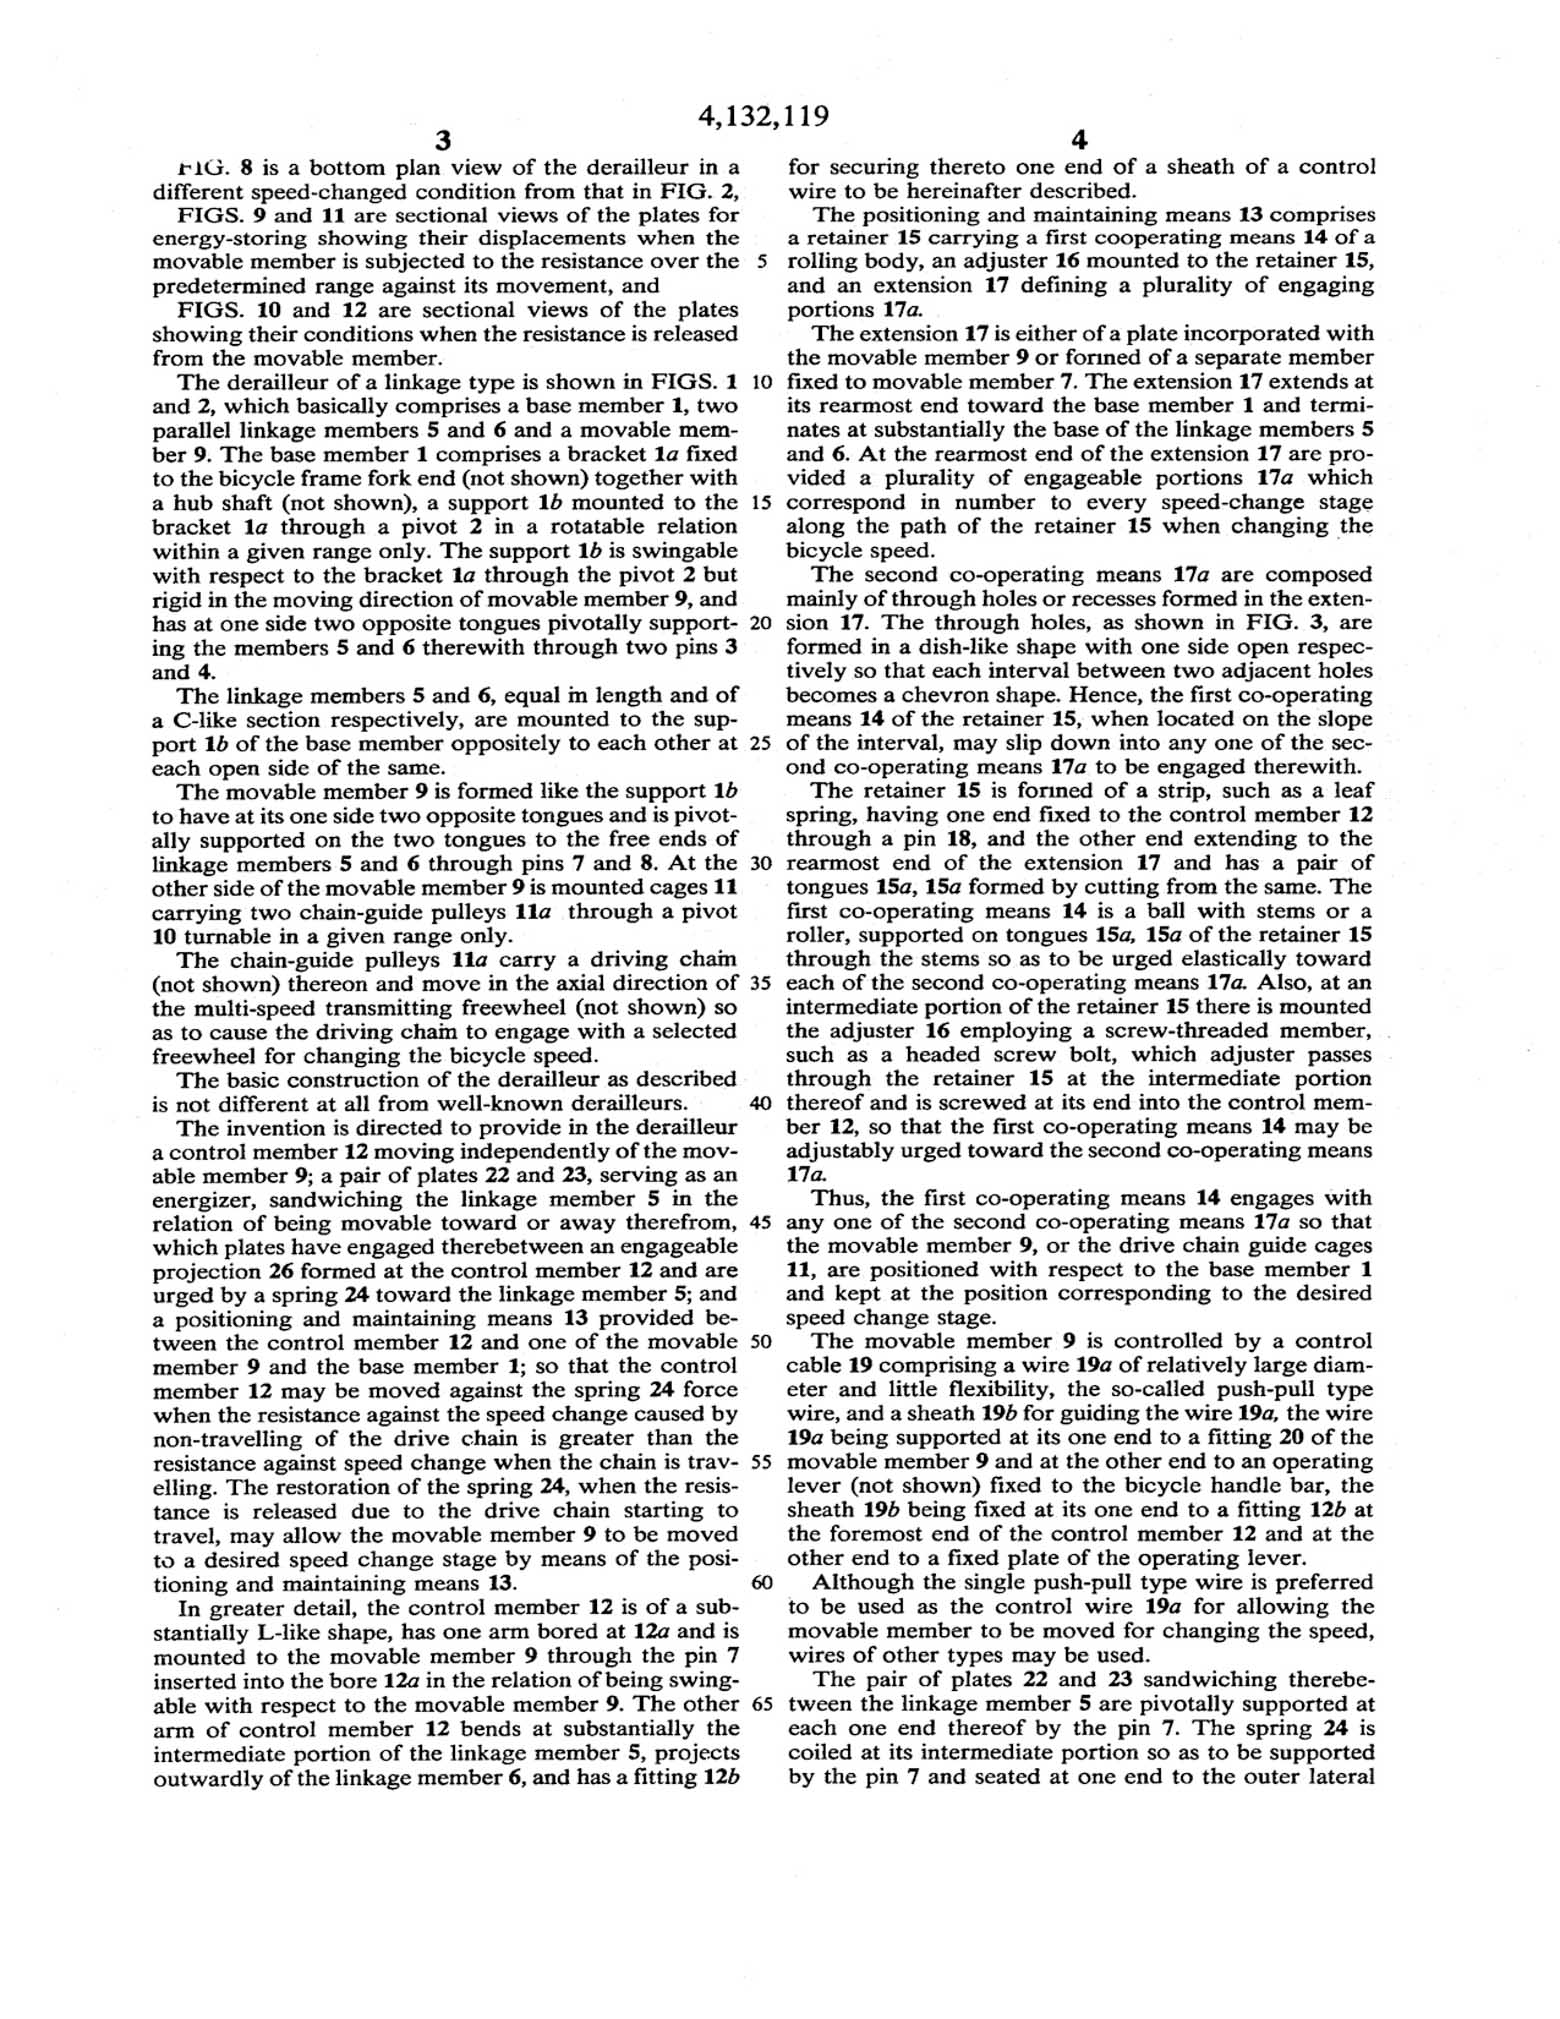 US Patent 4,132,119 - Shimano Positron scan 3 main image